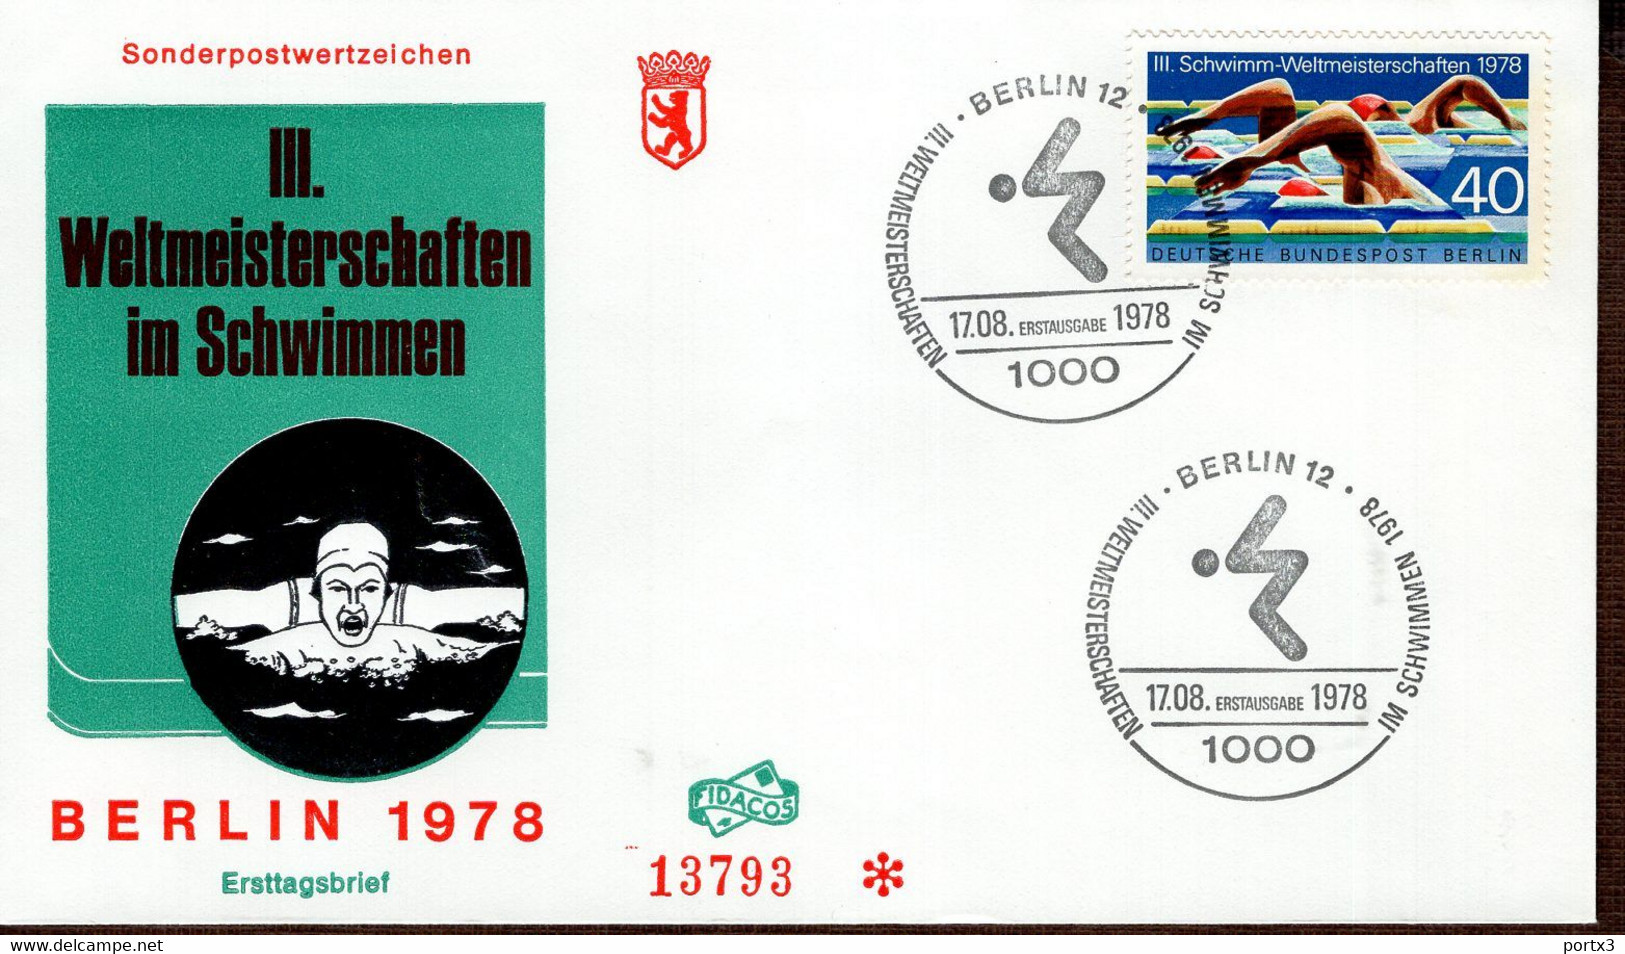 Berlin FDC aus 1978 ex 11items  gestempelt / used / oblitéré (Berl 021)